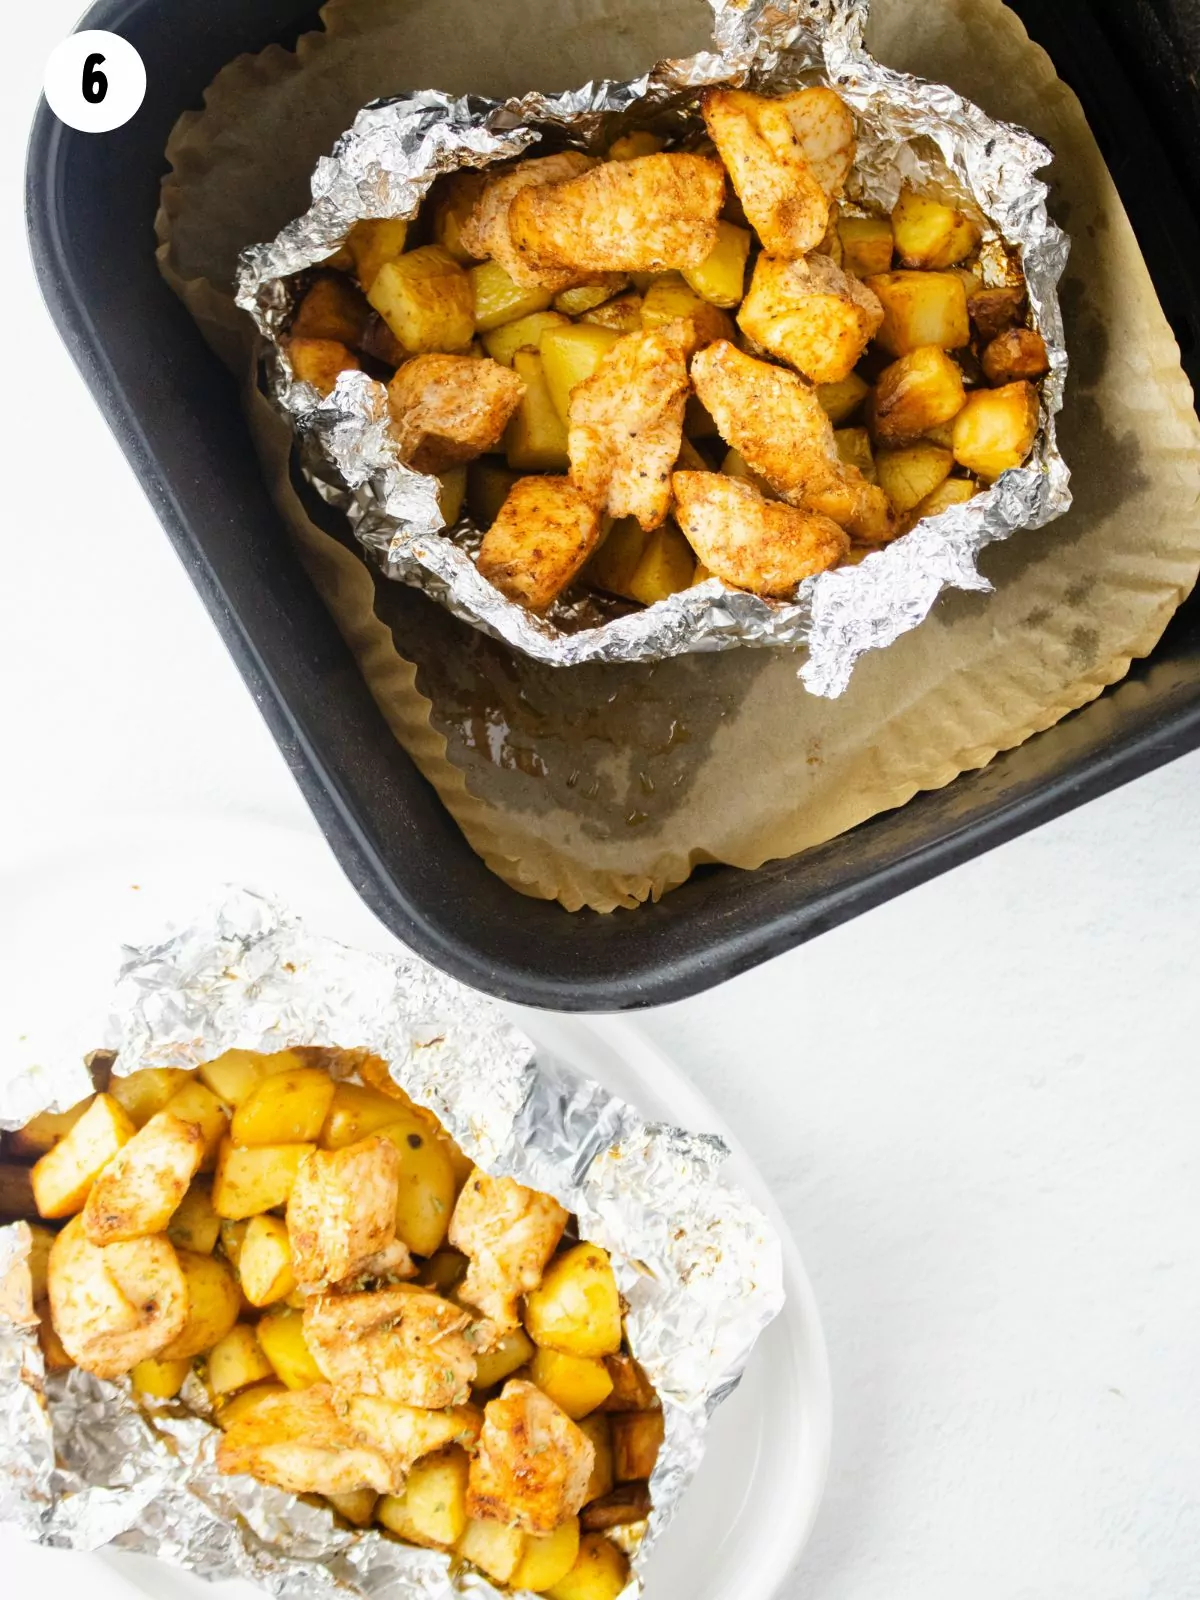 cooked chicken, potatoes in aluminum foil bundles.